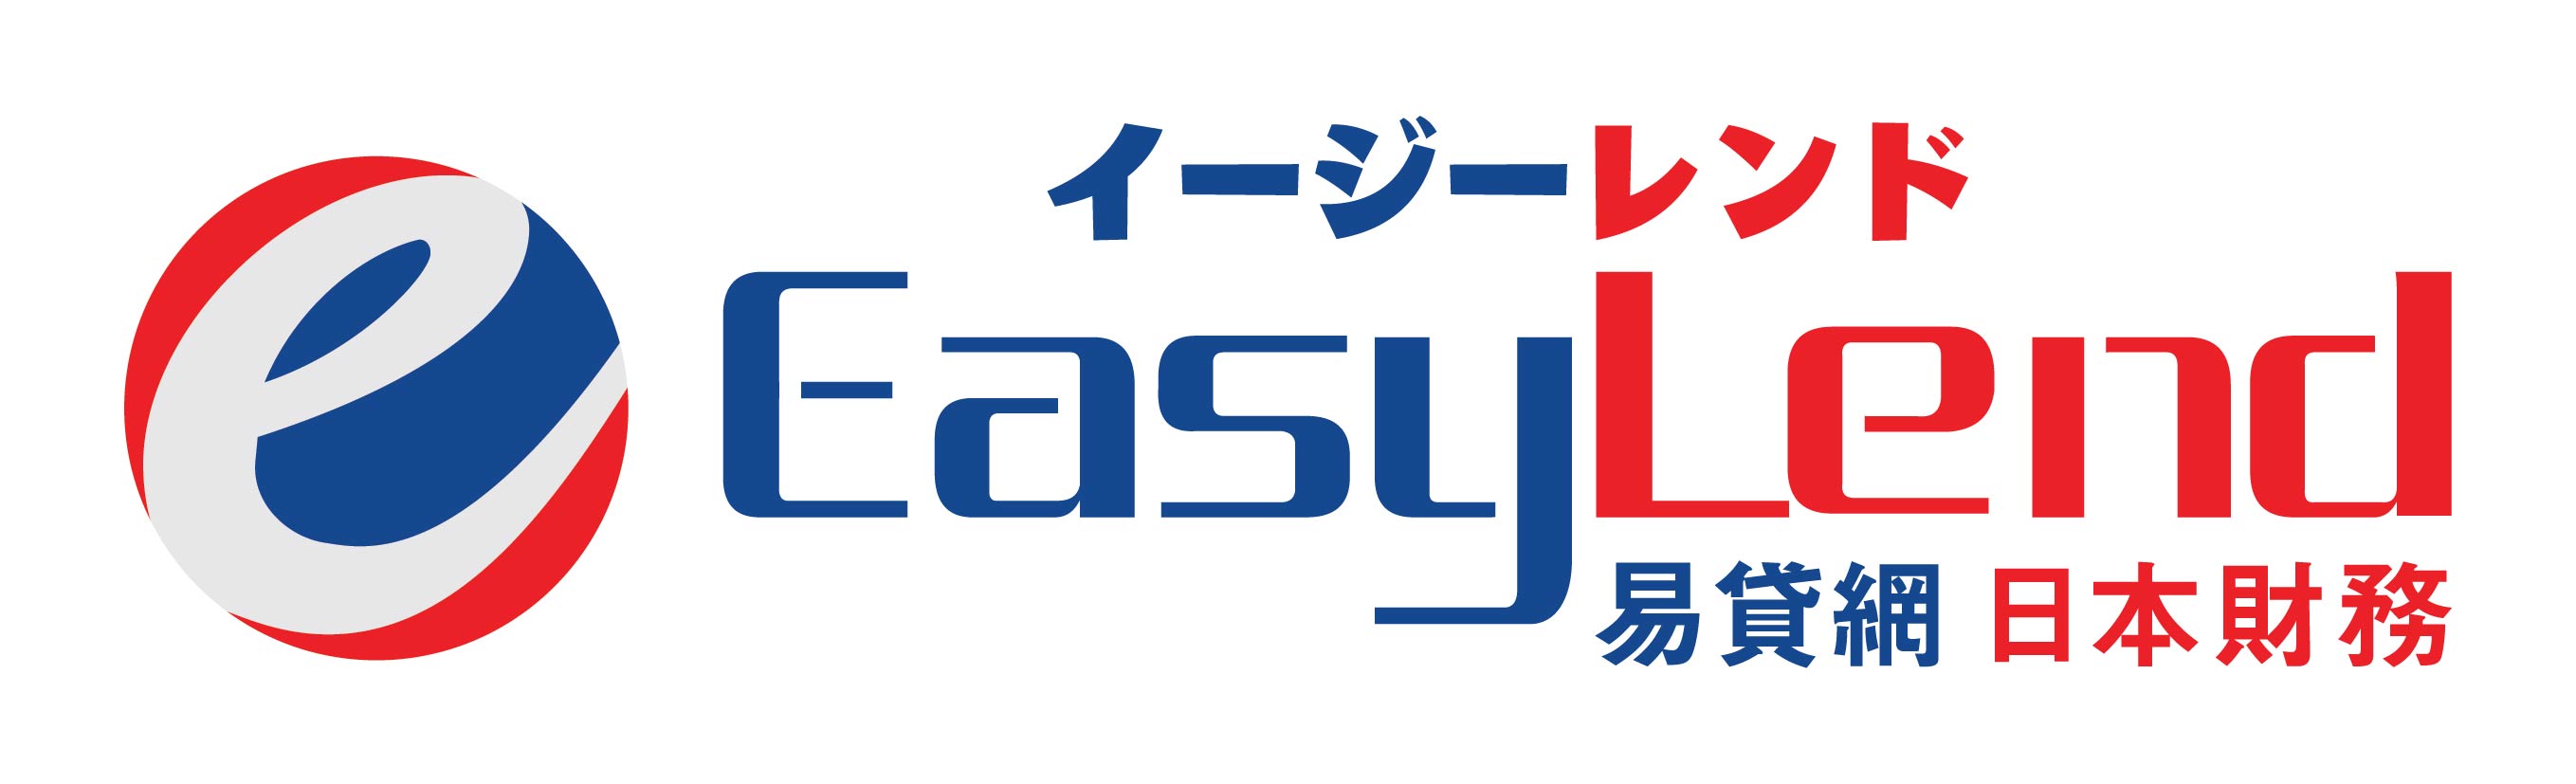 EasyLend 易貸網日本財務